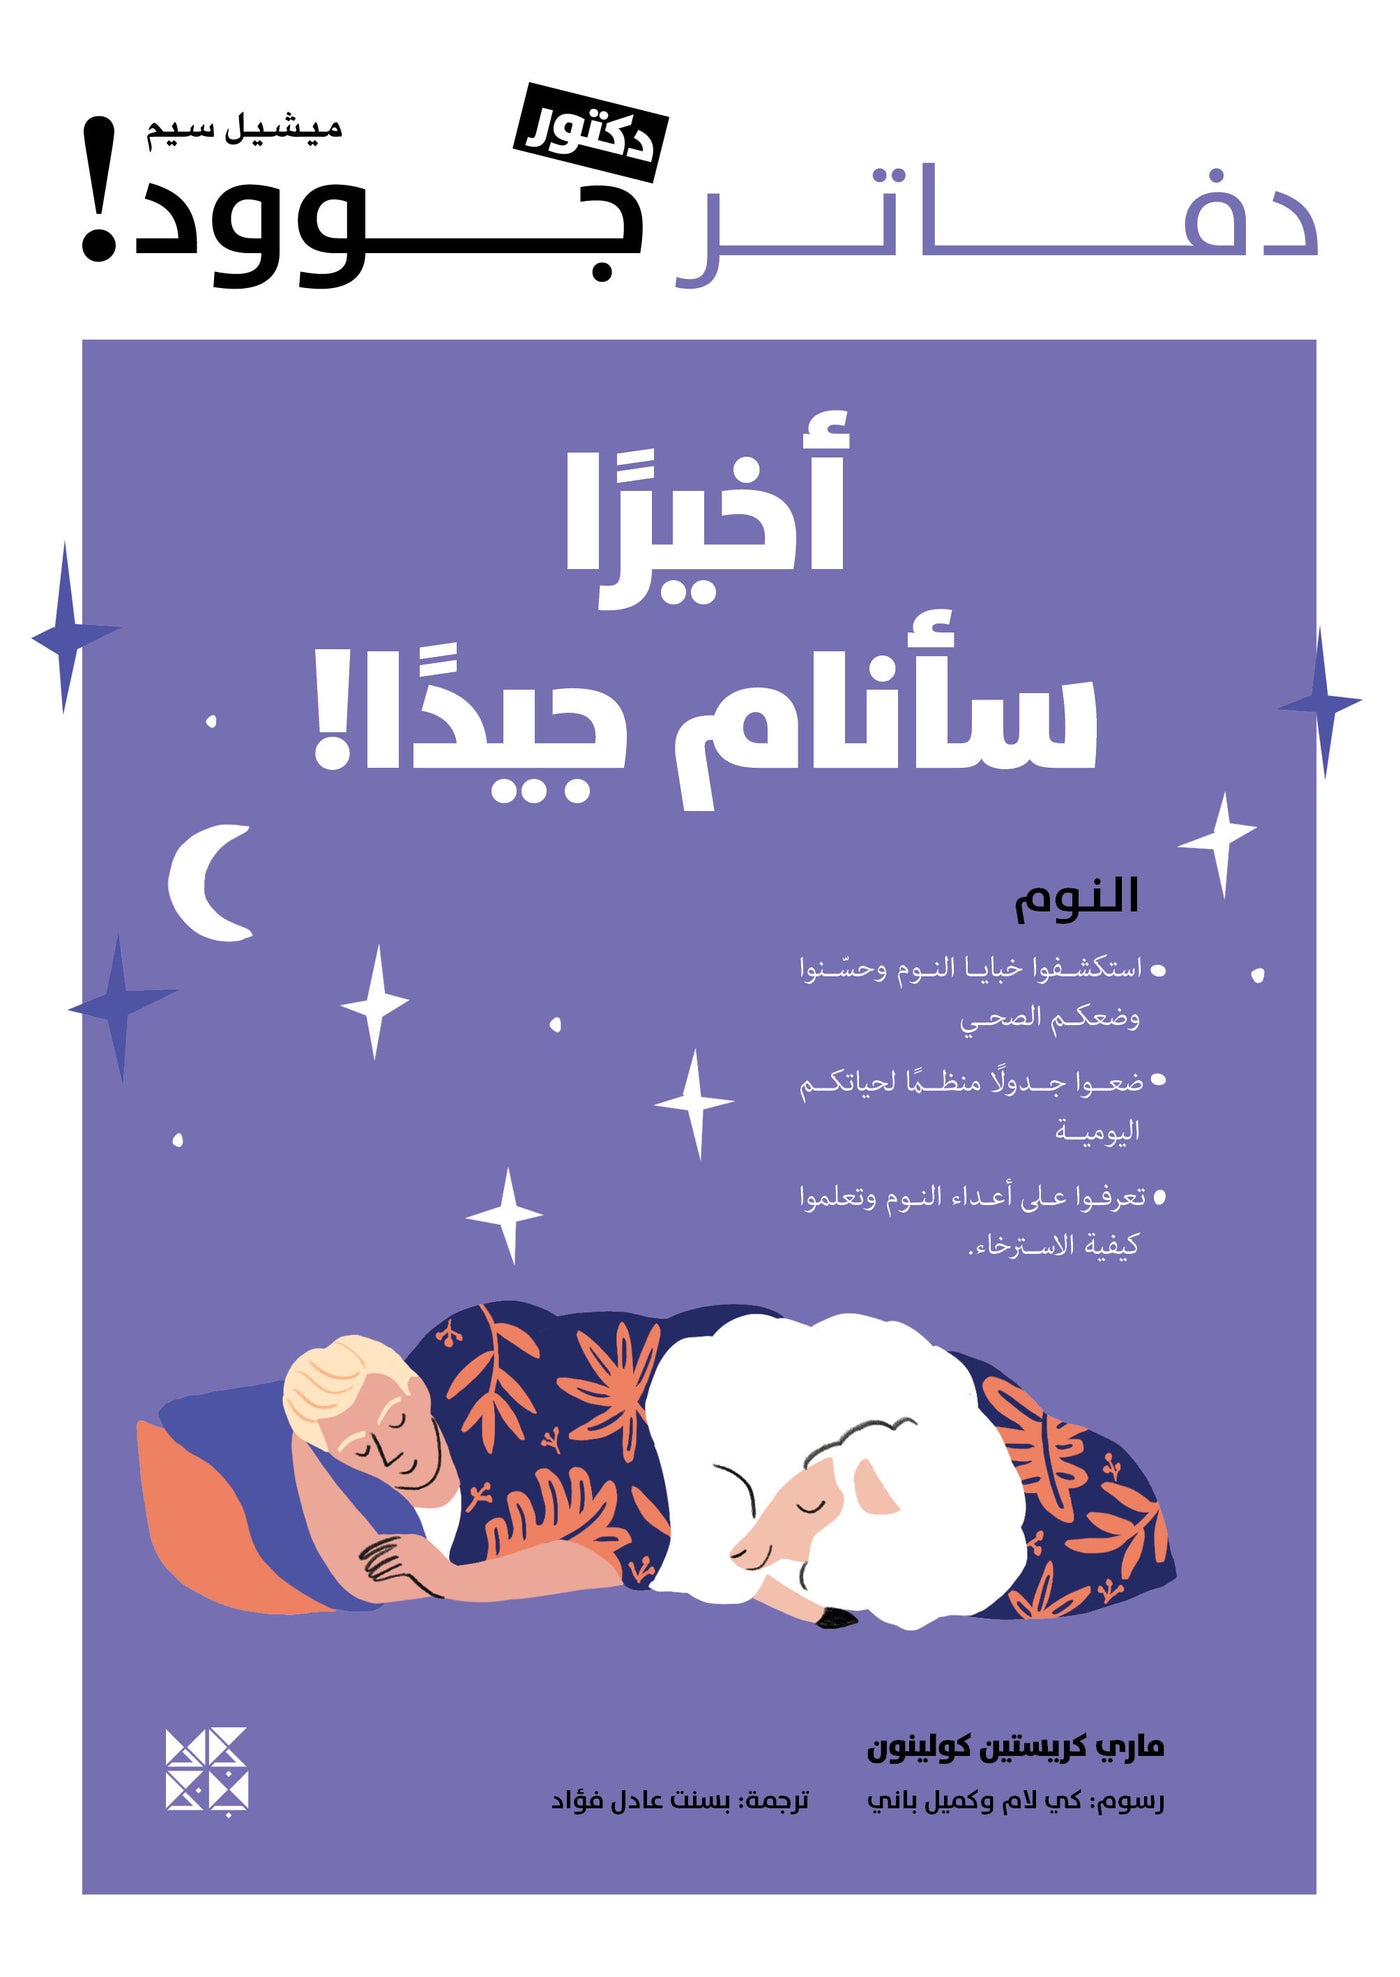 I Will Finally Sleep Well! Book Cover